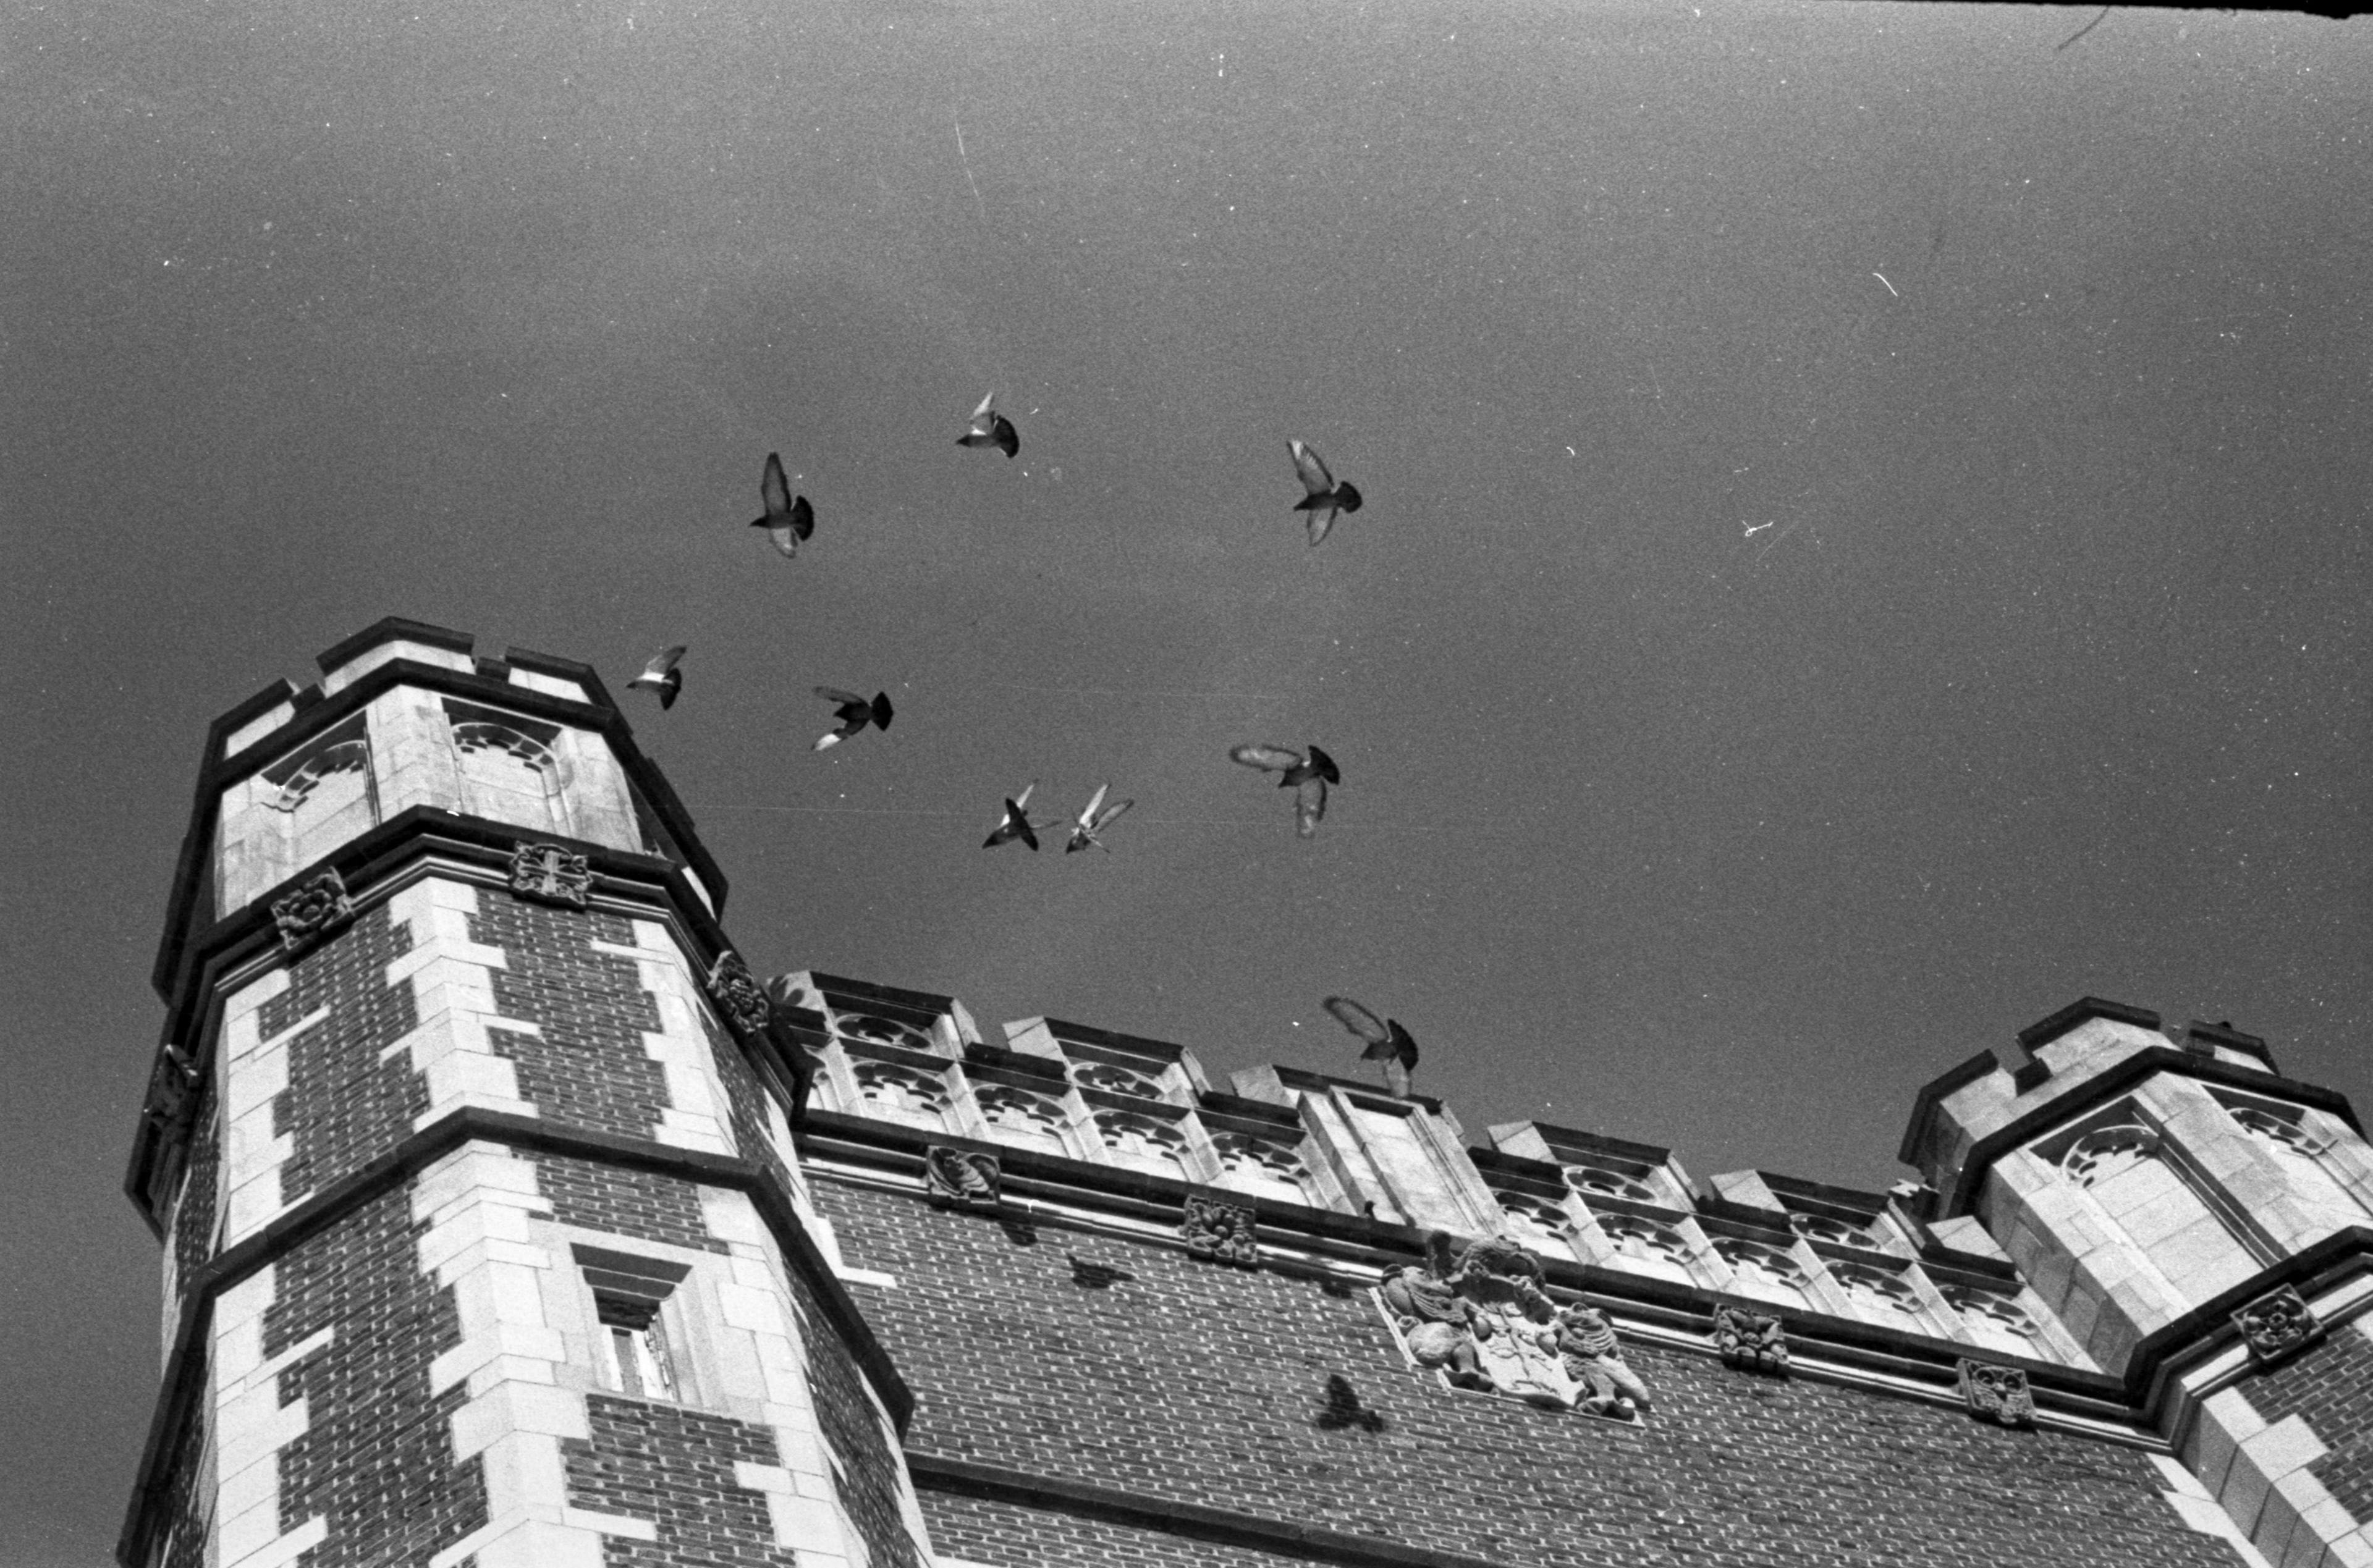 Birds flying above the Penn Dental School building